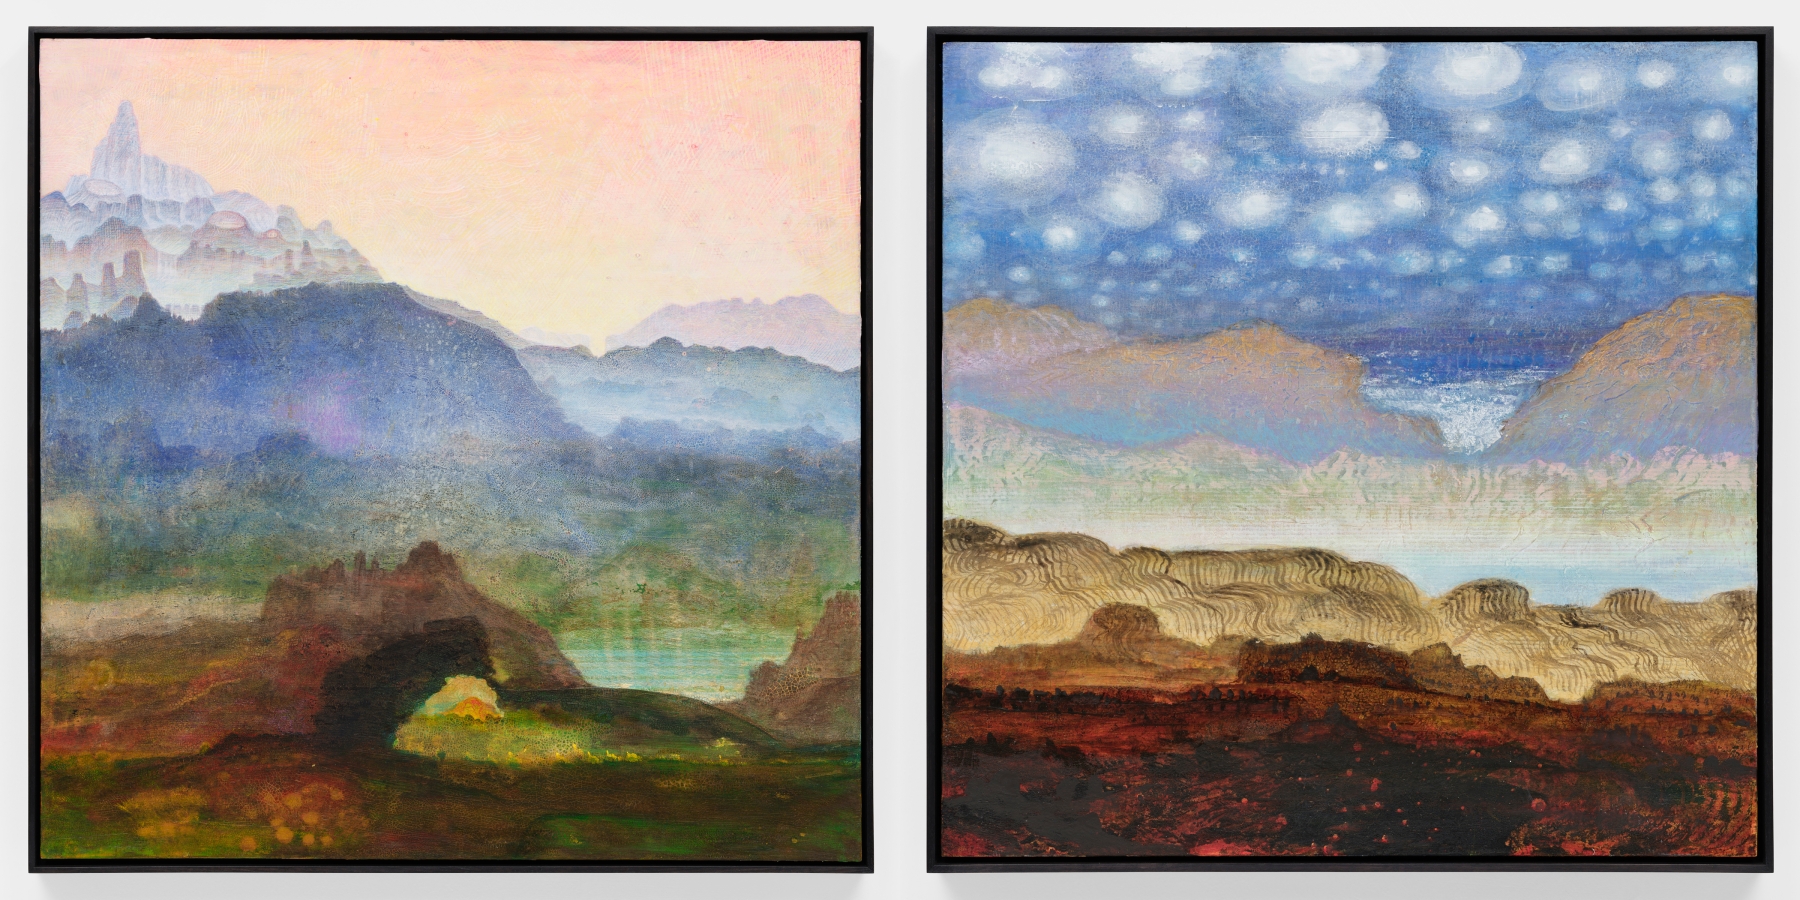 Left: Joan Nelson, Untitled, 2022

Right: Joan Nelson, Untitled, 2022